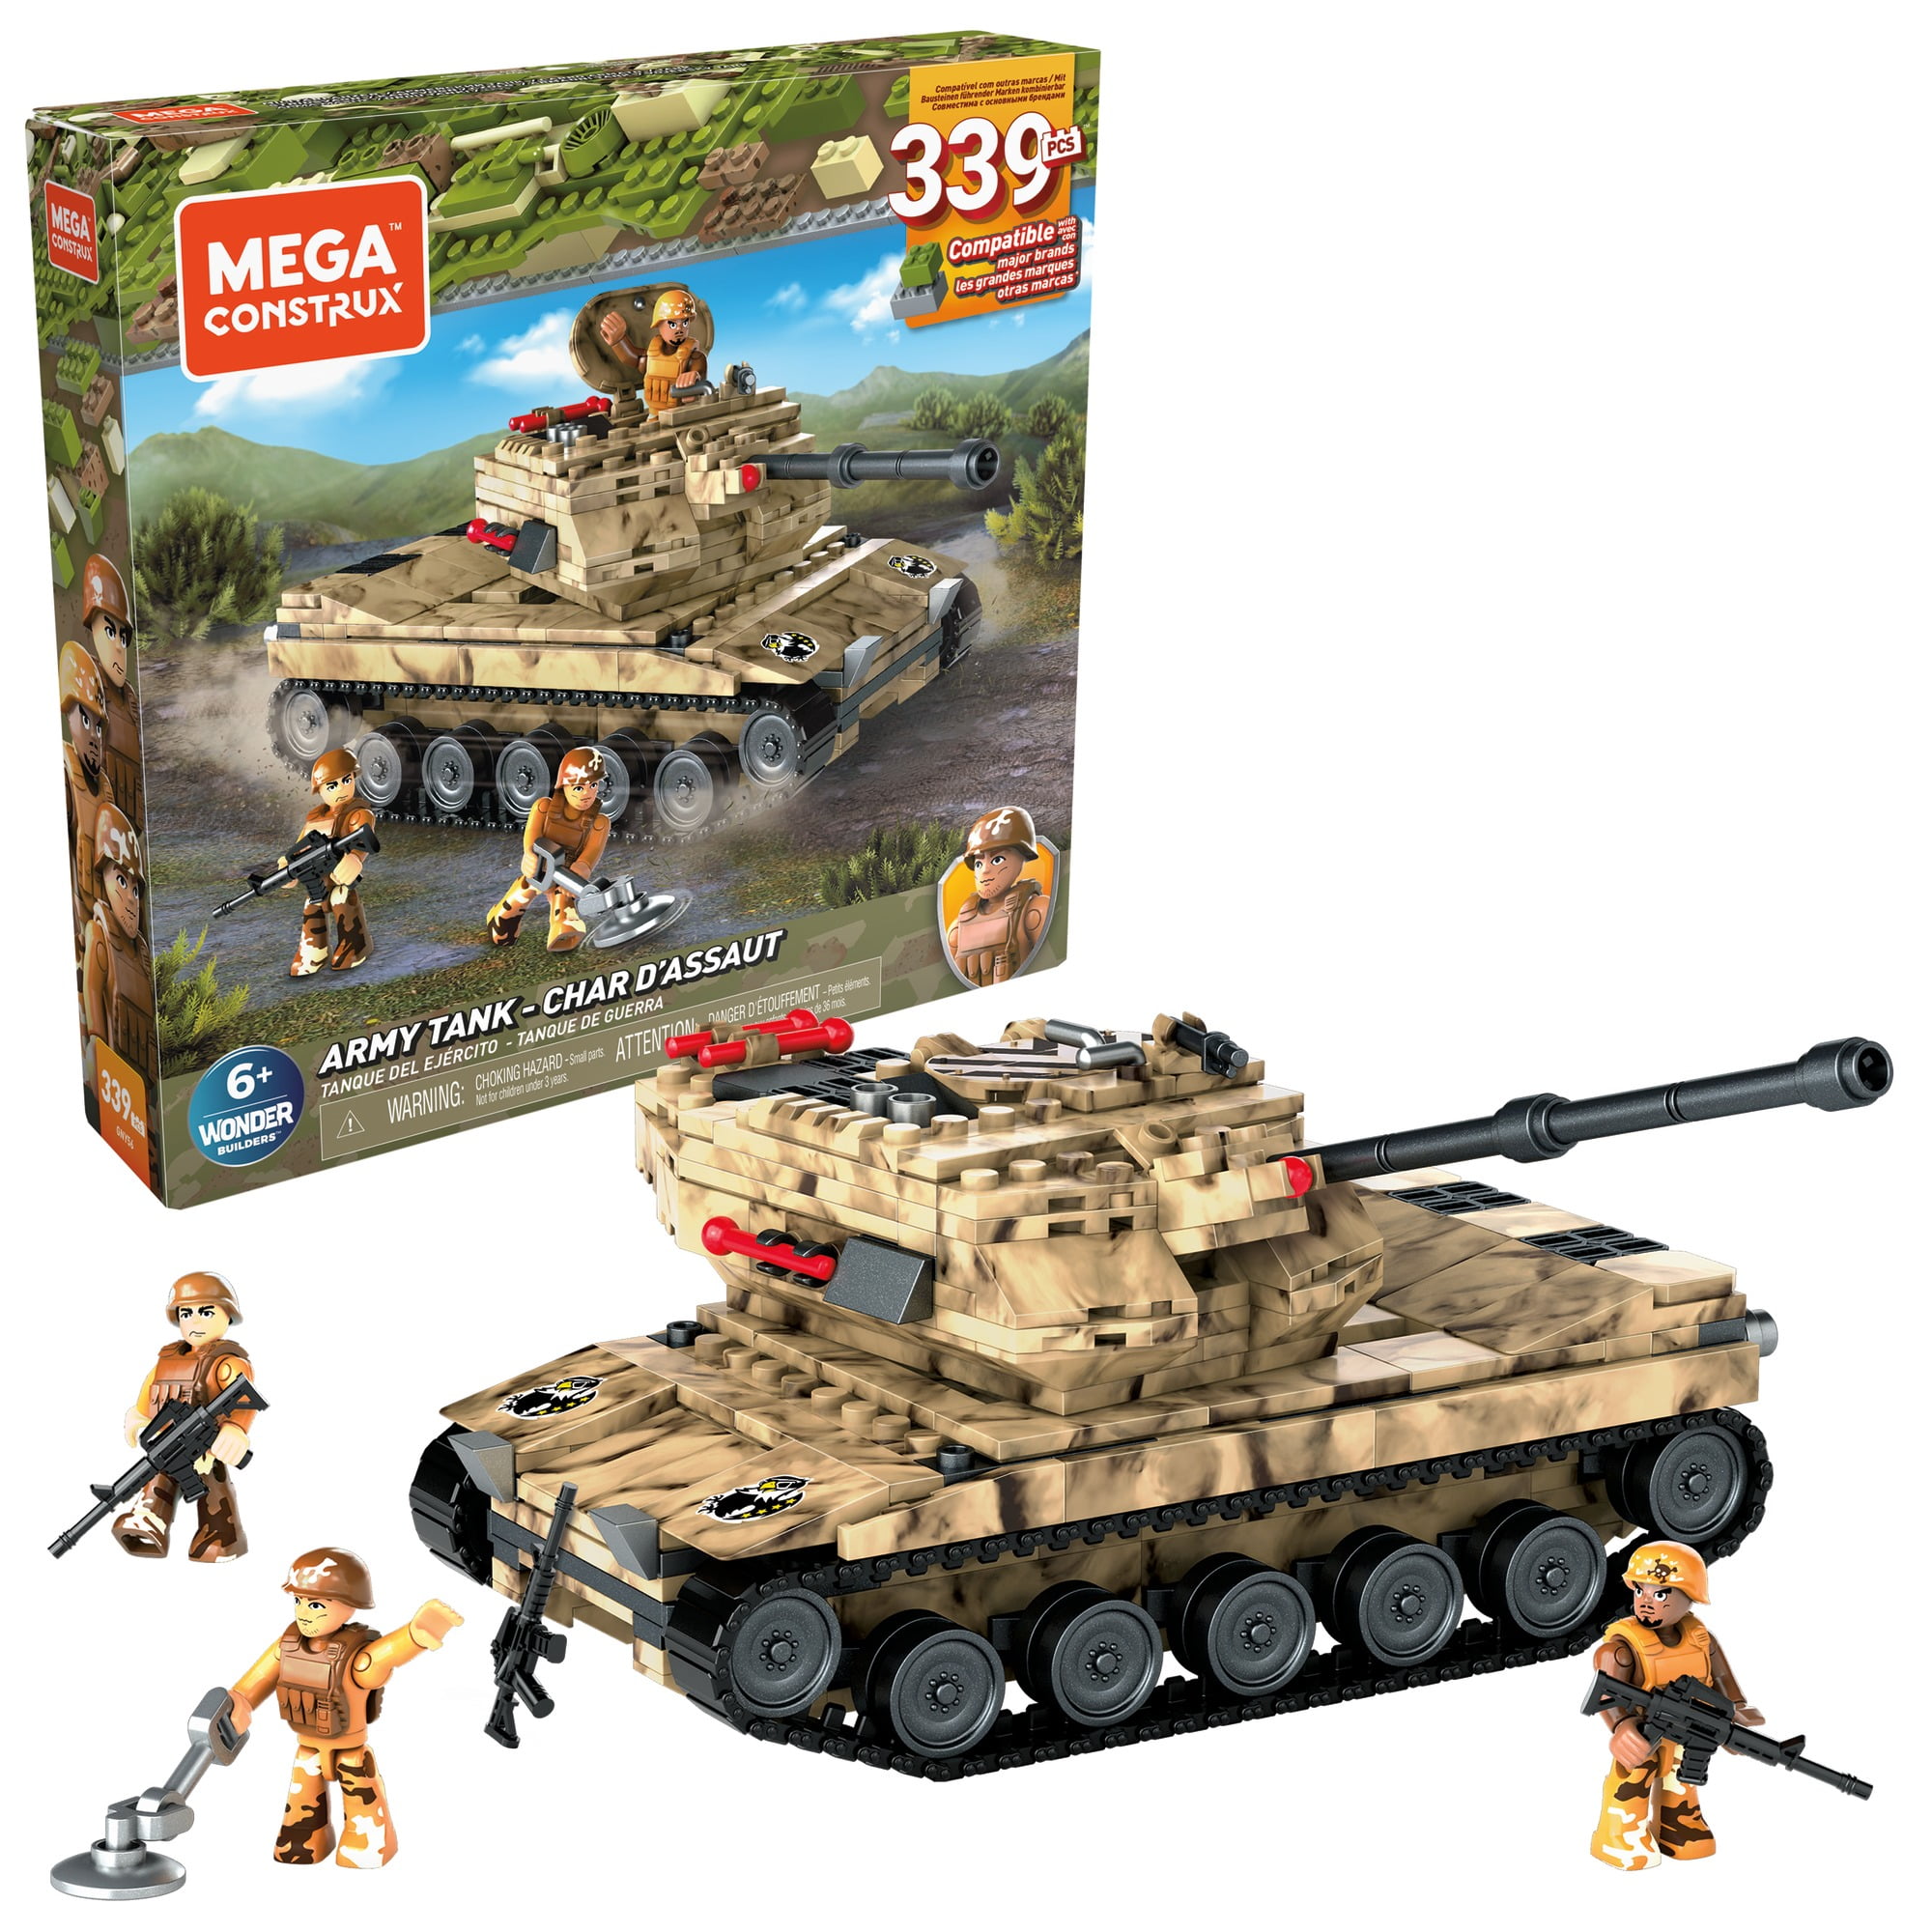 Cool 16in1 Building Blocks Set Military Plane Tank Children DIY Eductional Toys 